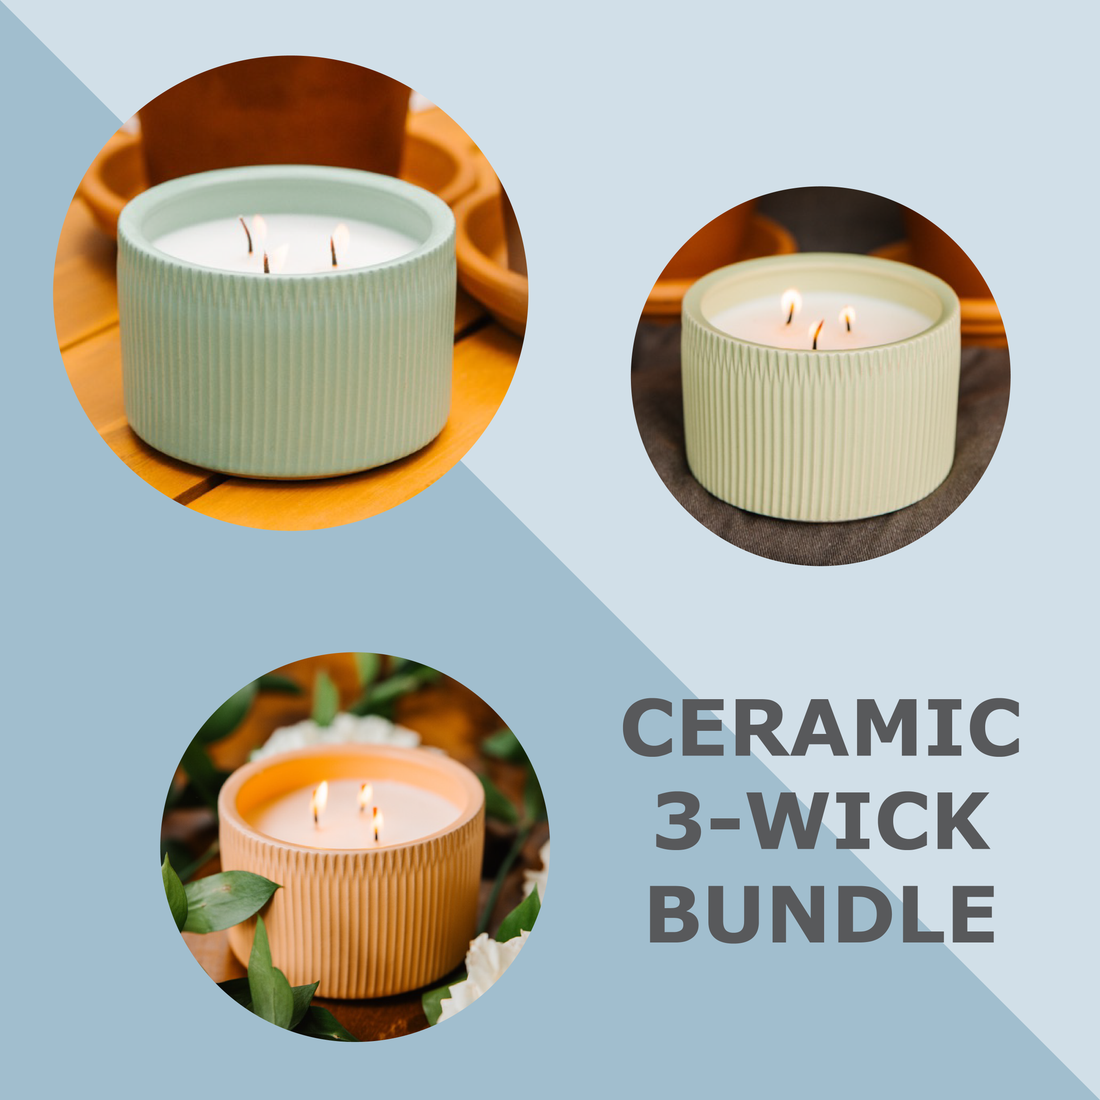 3-Wick Ceramic Bundle Image